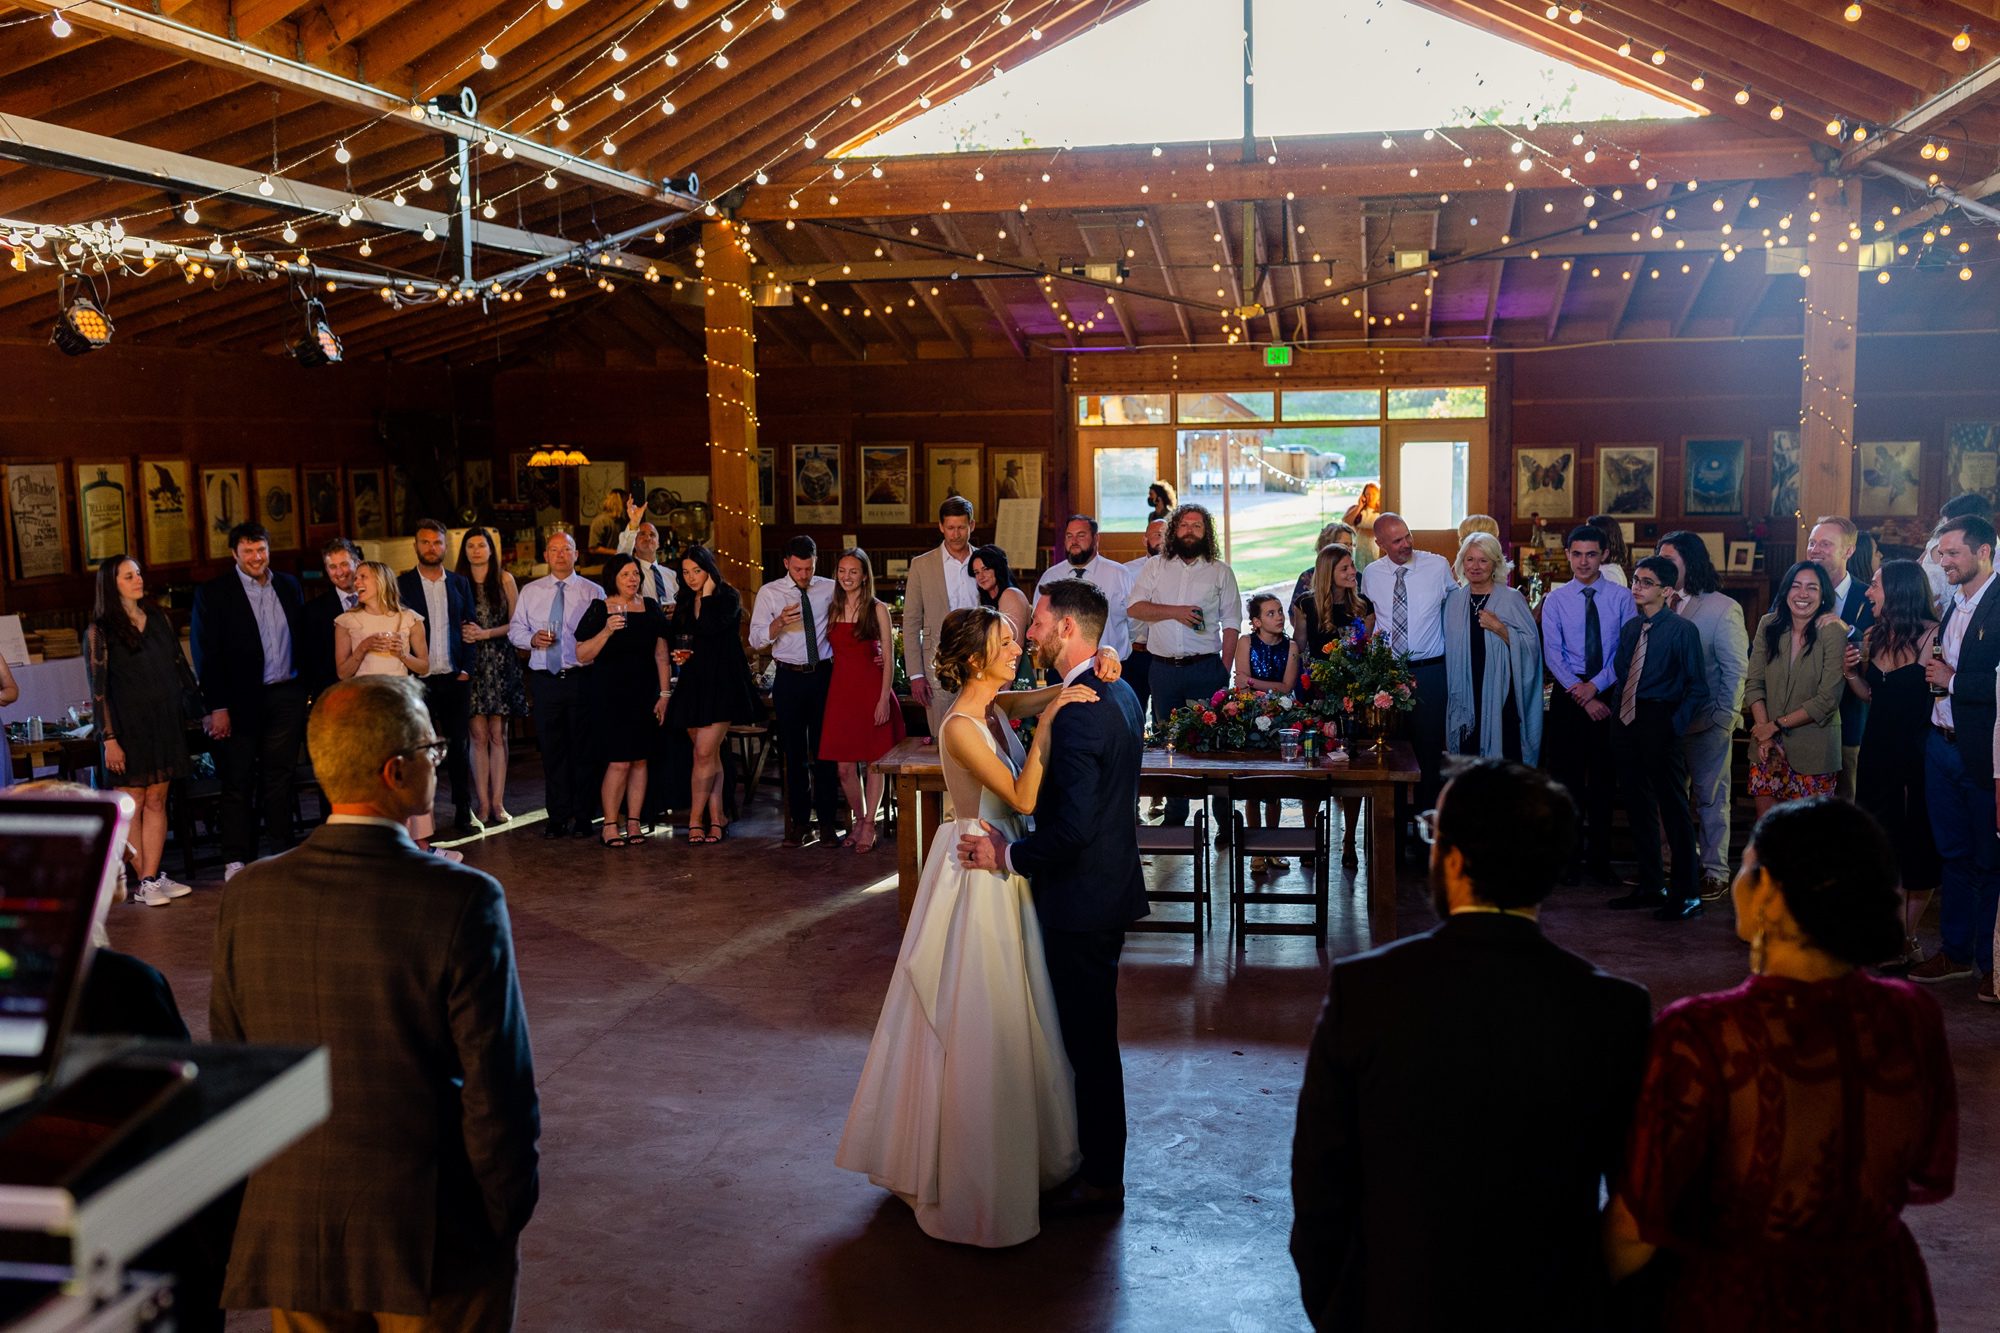 First Dance, Wedding reception sign, Planet Bluegrass Wedding venue in Lyons Colorado: Colorado Wedding Photographer, Wedding reception